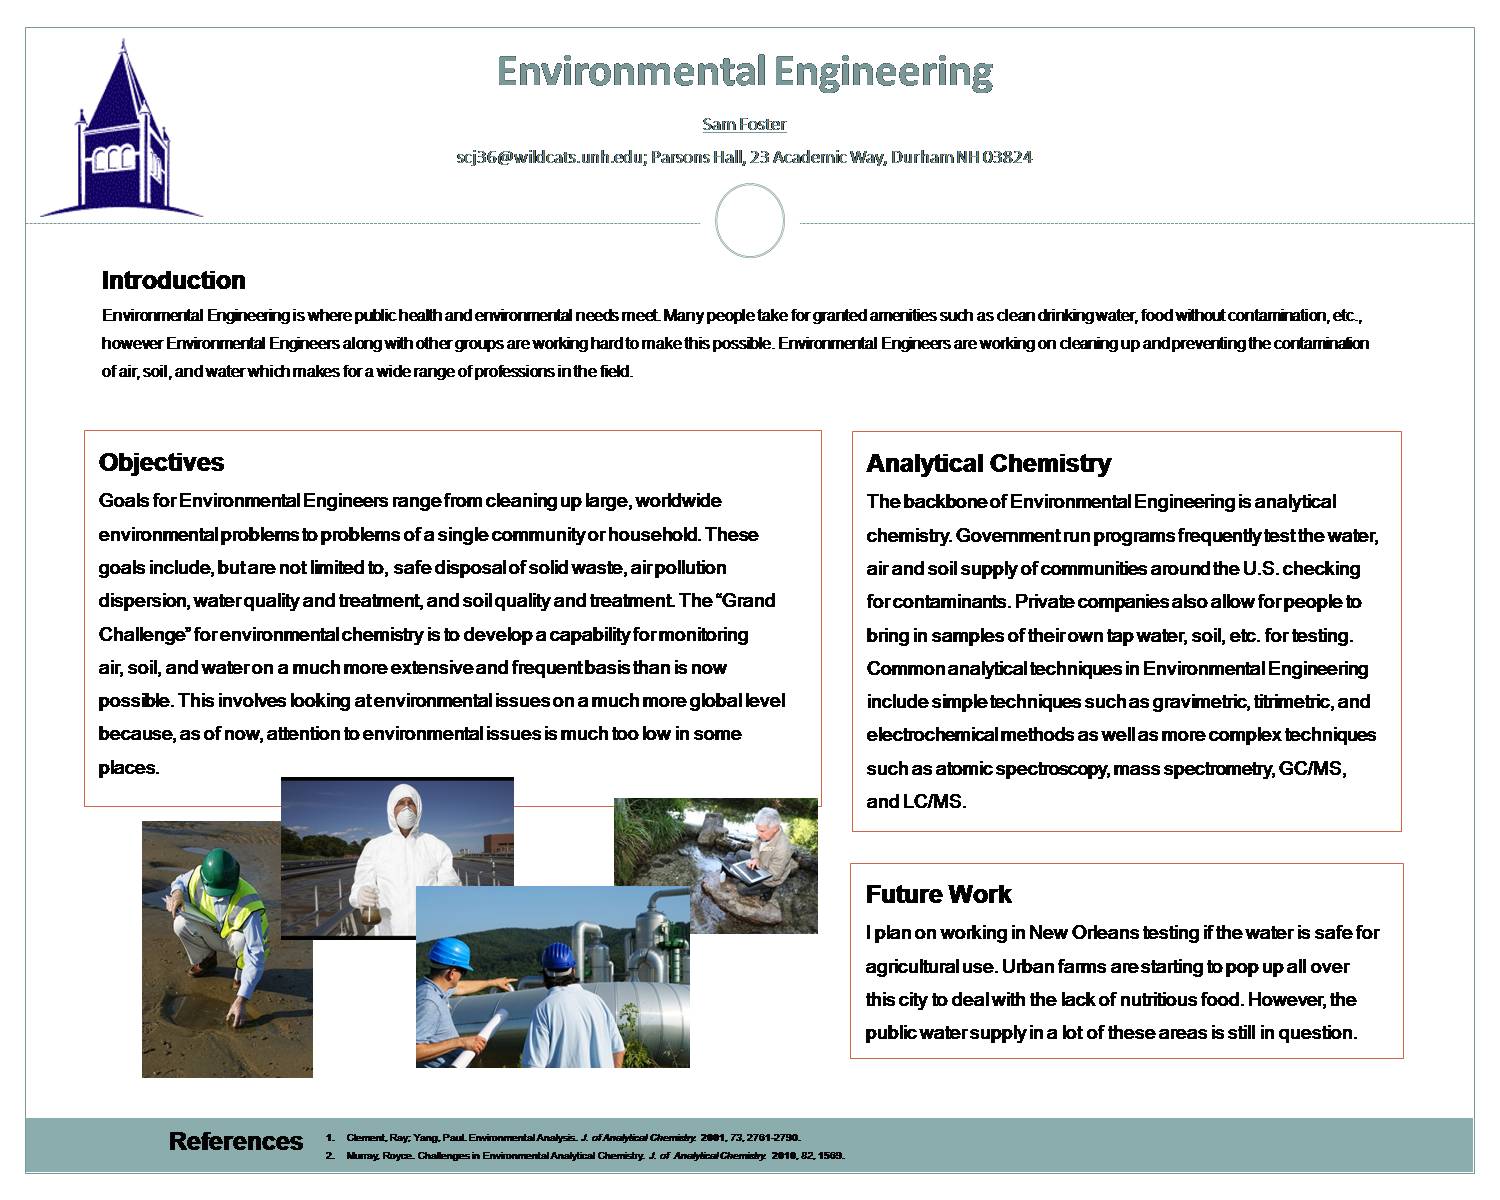 Environmental Engineering by scj36